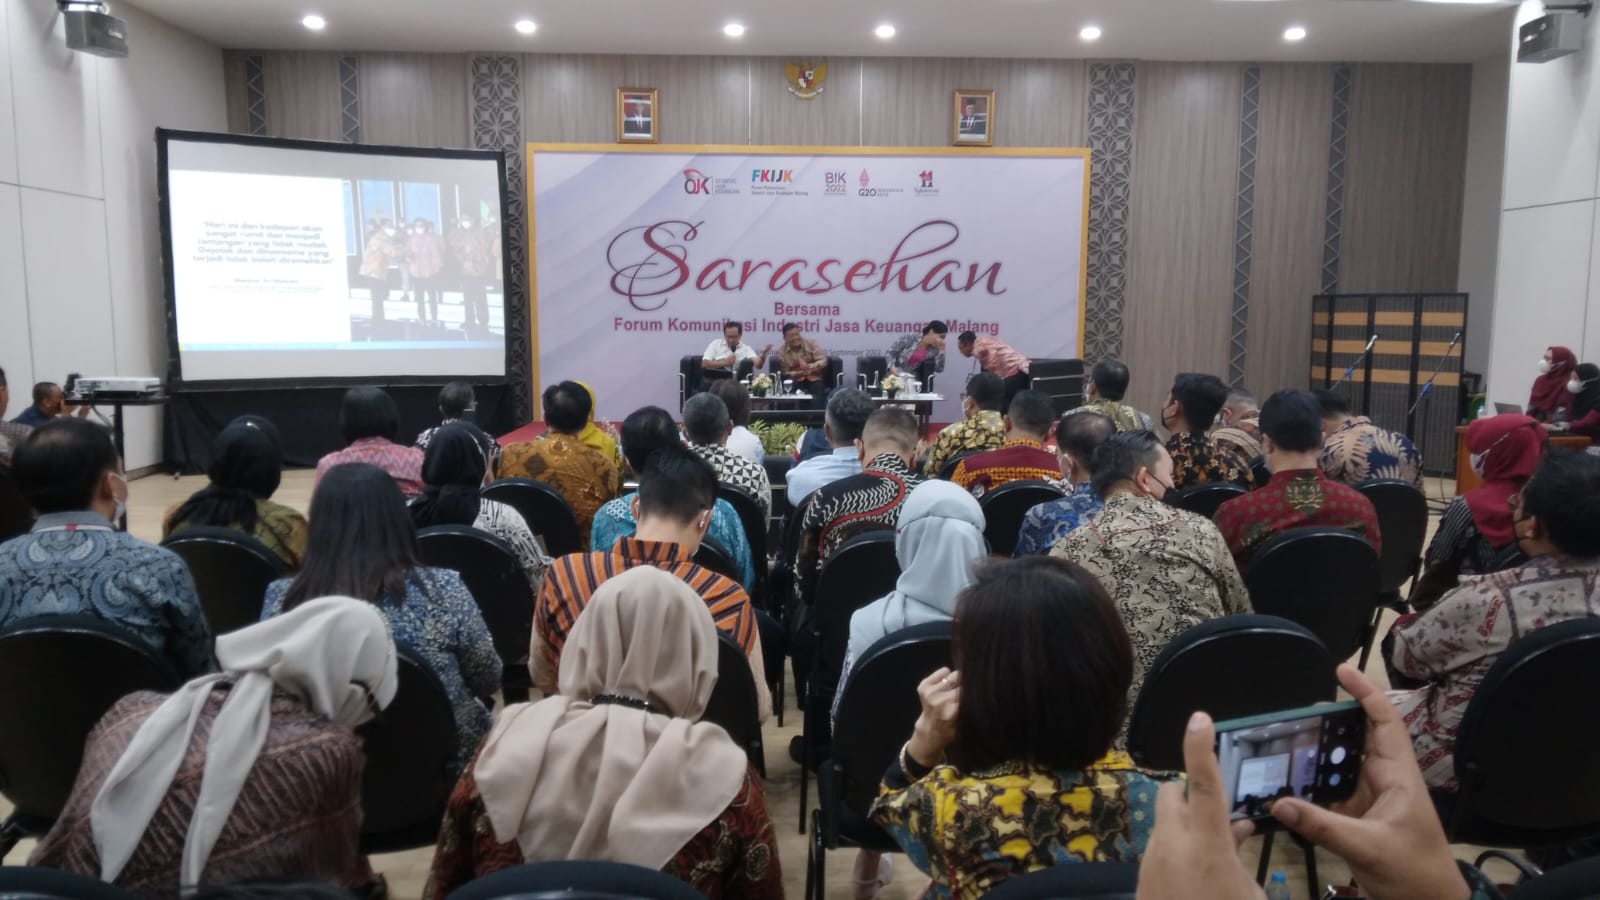 Suasana Sarahsehan Bersama Forum Komunikasi Jasa Keuangan Malang. 